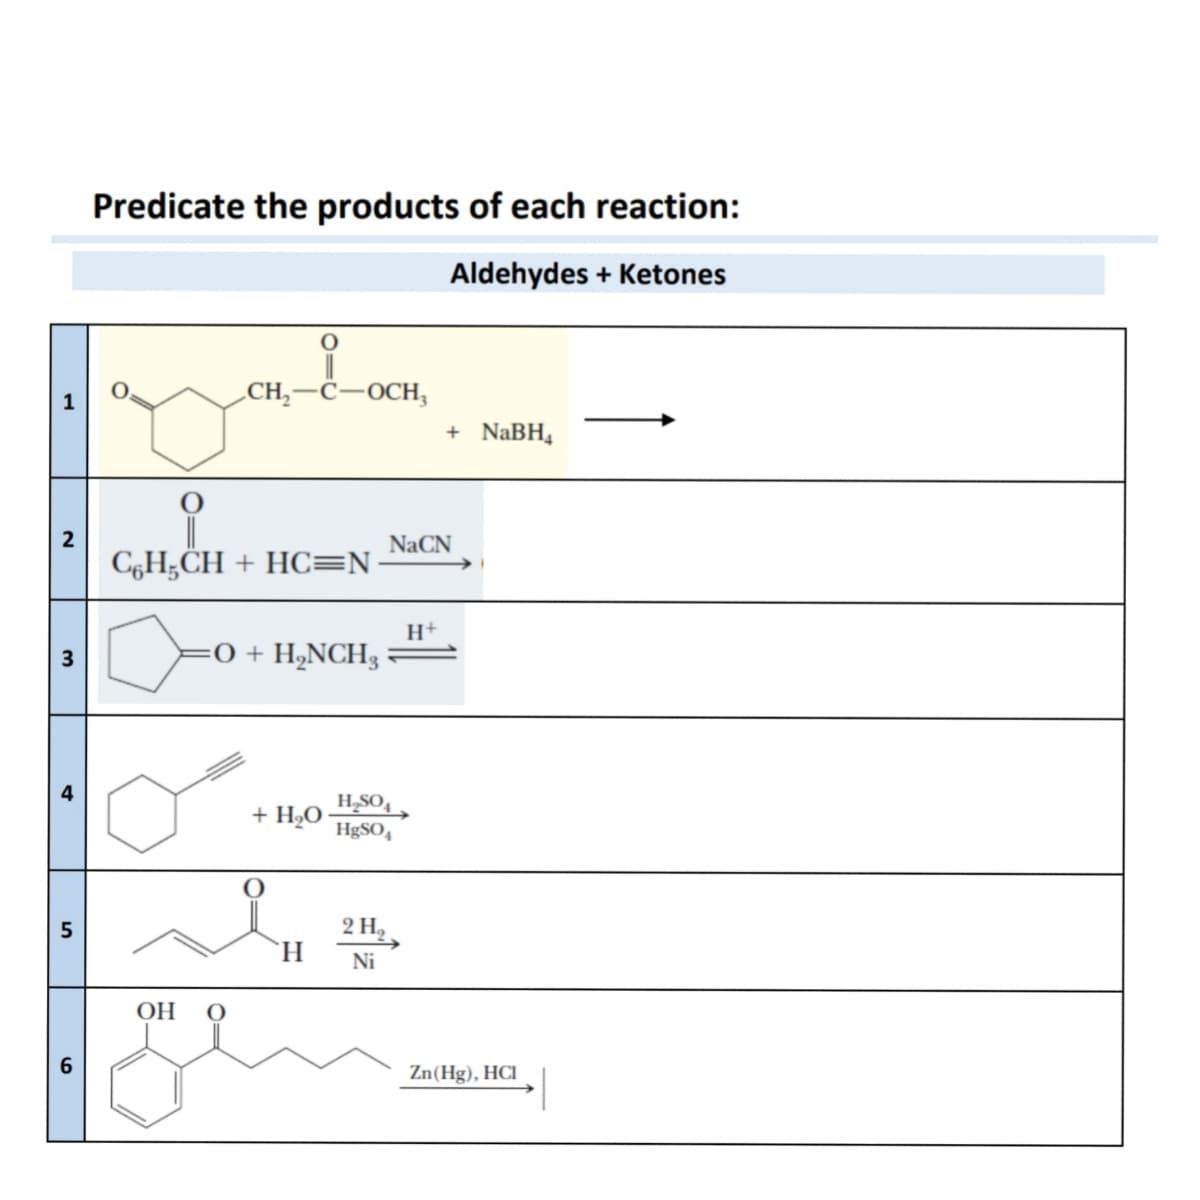 N
3
5
Predicate the products of each reaction:
Aldehydes + Ketones
CH₂-C-OCH,
CH;CH + HC=N
=O + H₂NCH₂
OH O
+ H₂O
H
H₂SO4
HgSO4
2 H₂
Ni
NaCN
+ NaBH₂
H+
Zn (Hg), HCI